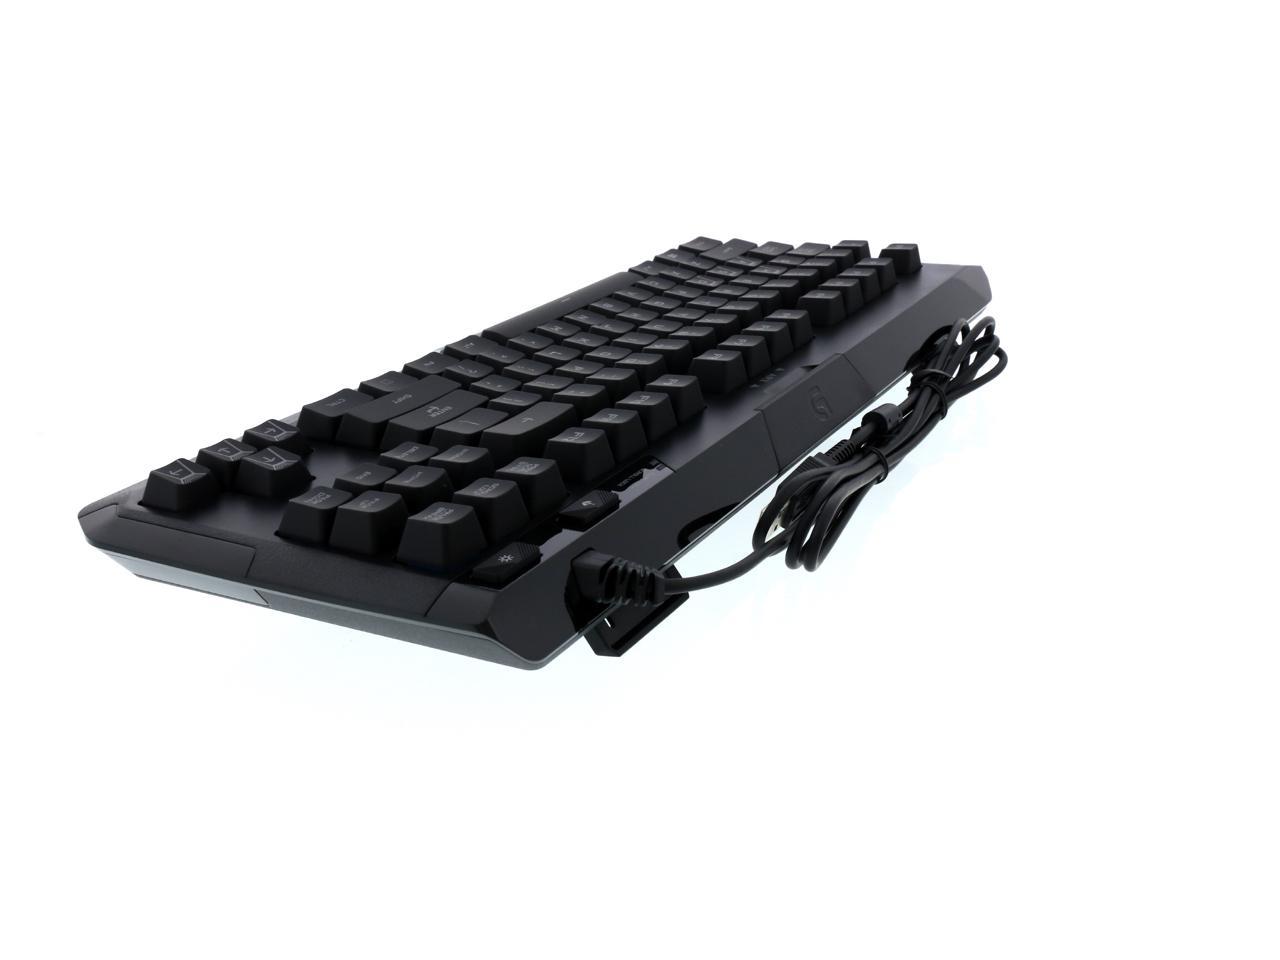 Logitech G410 Atlas Spectrum RGB Tenkeyless Gaming Keyboard - Newegg.com